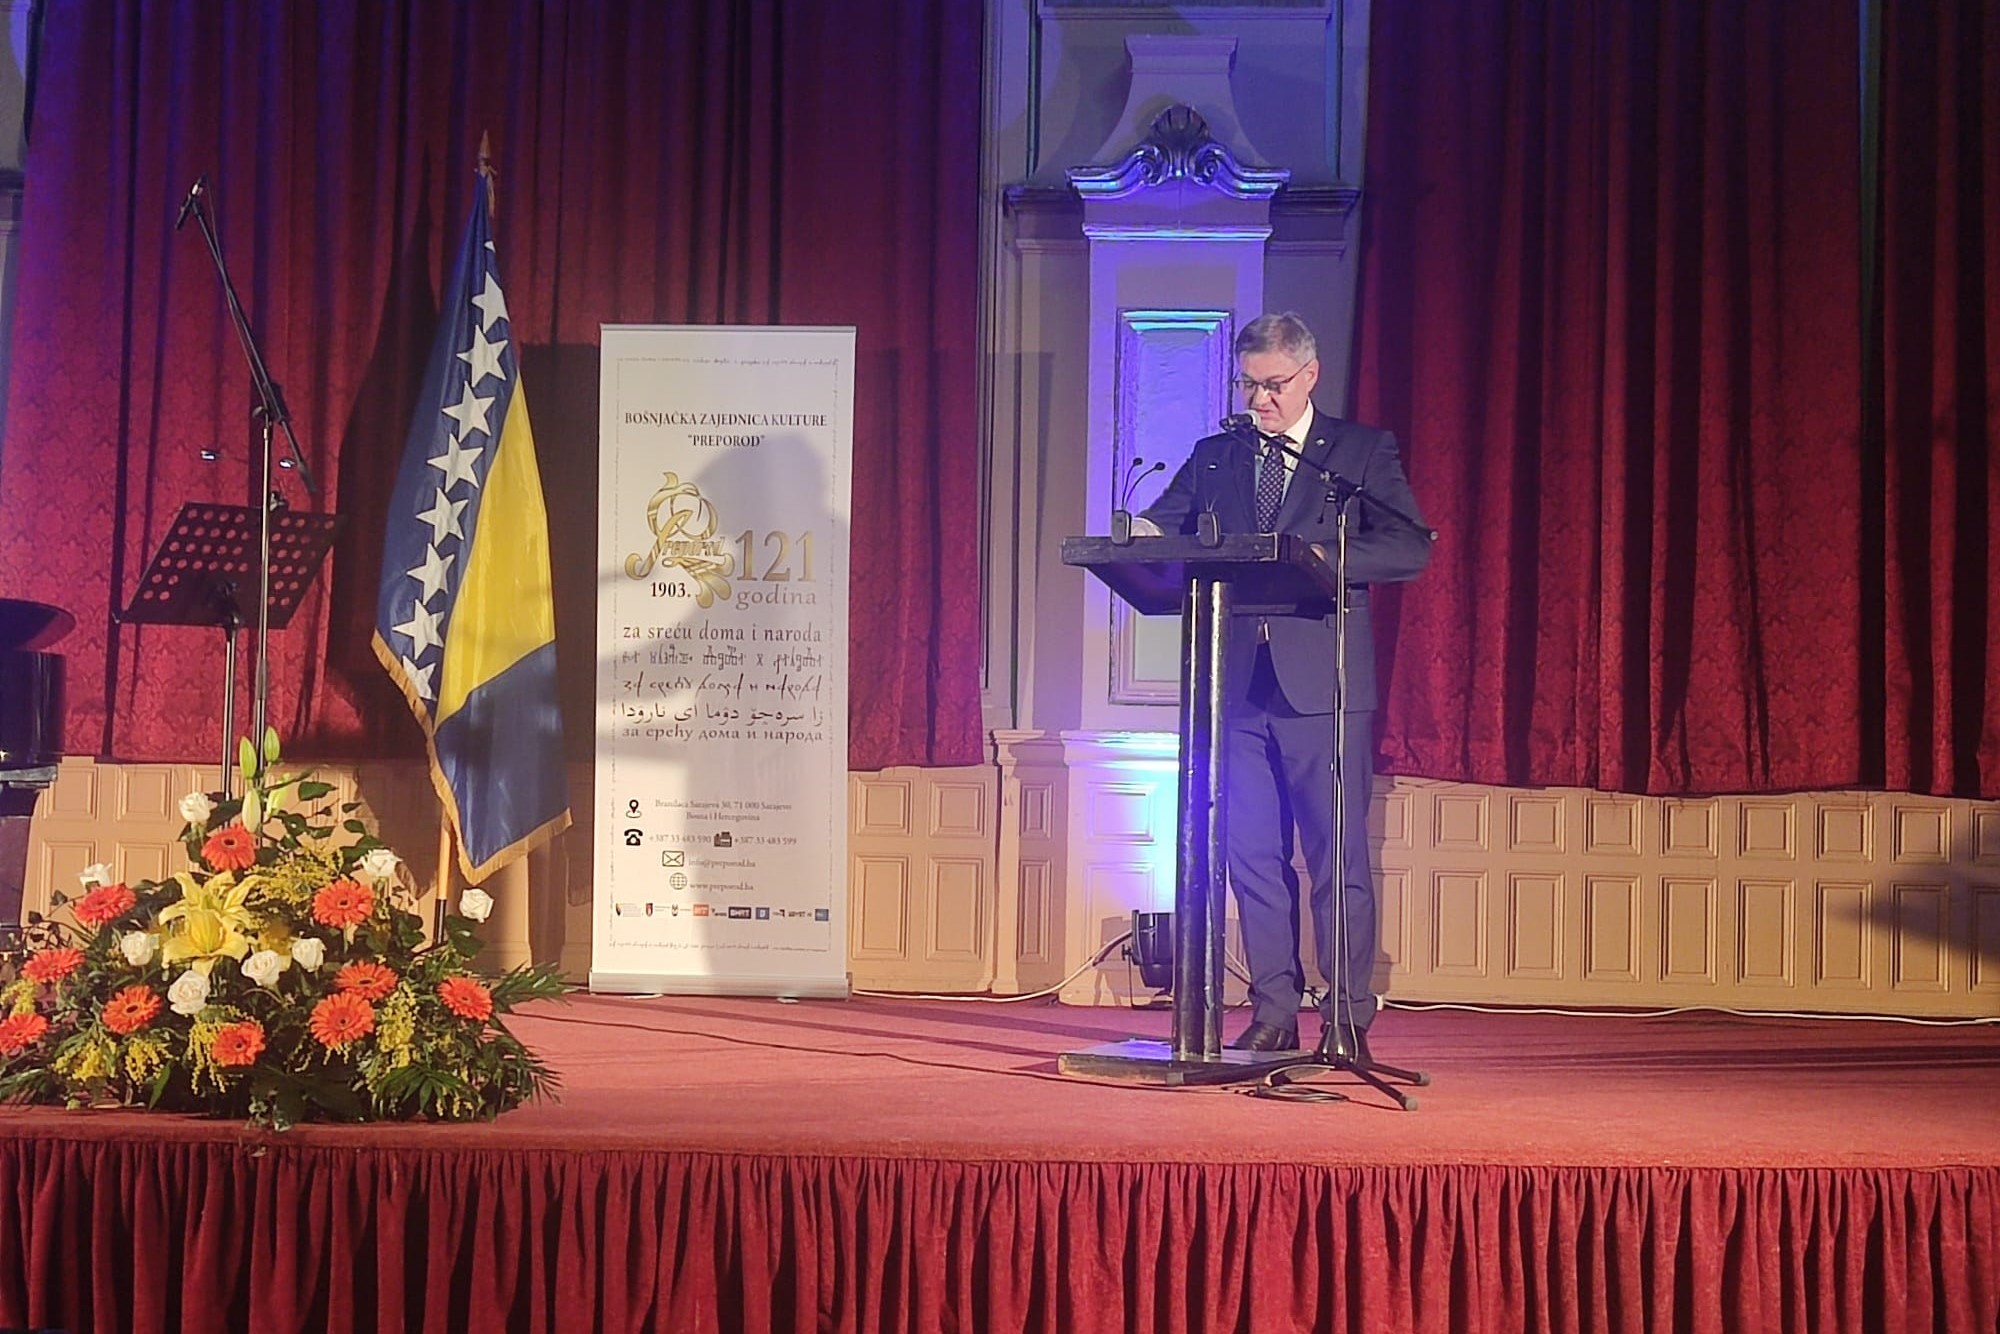 Zamjenik predsjedavajućeg Predstavničkog doma PSBiH dr. Denis Zvizdić održao govor na svečanosti obilježavanja 121. godišnjice osnivanja “Preporoda” 